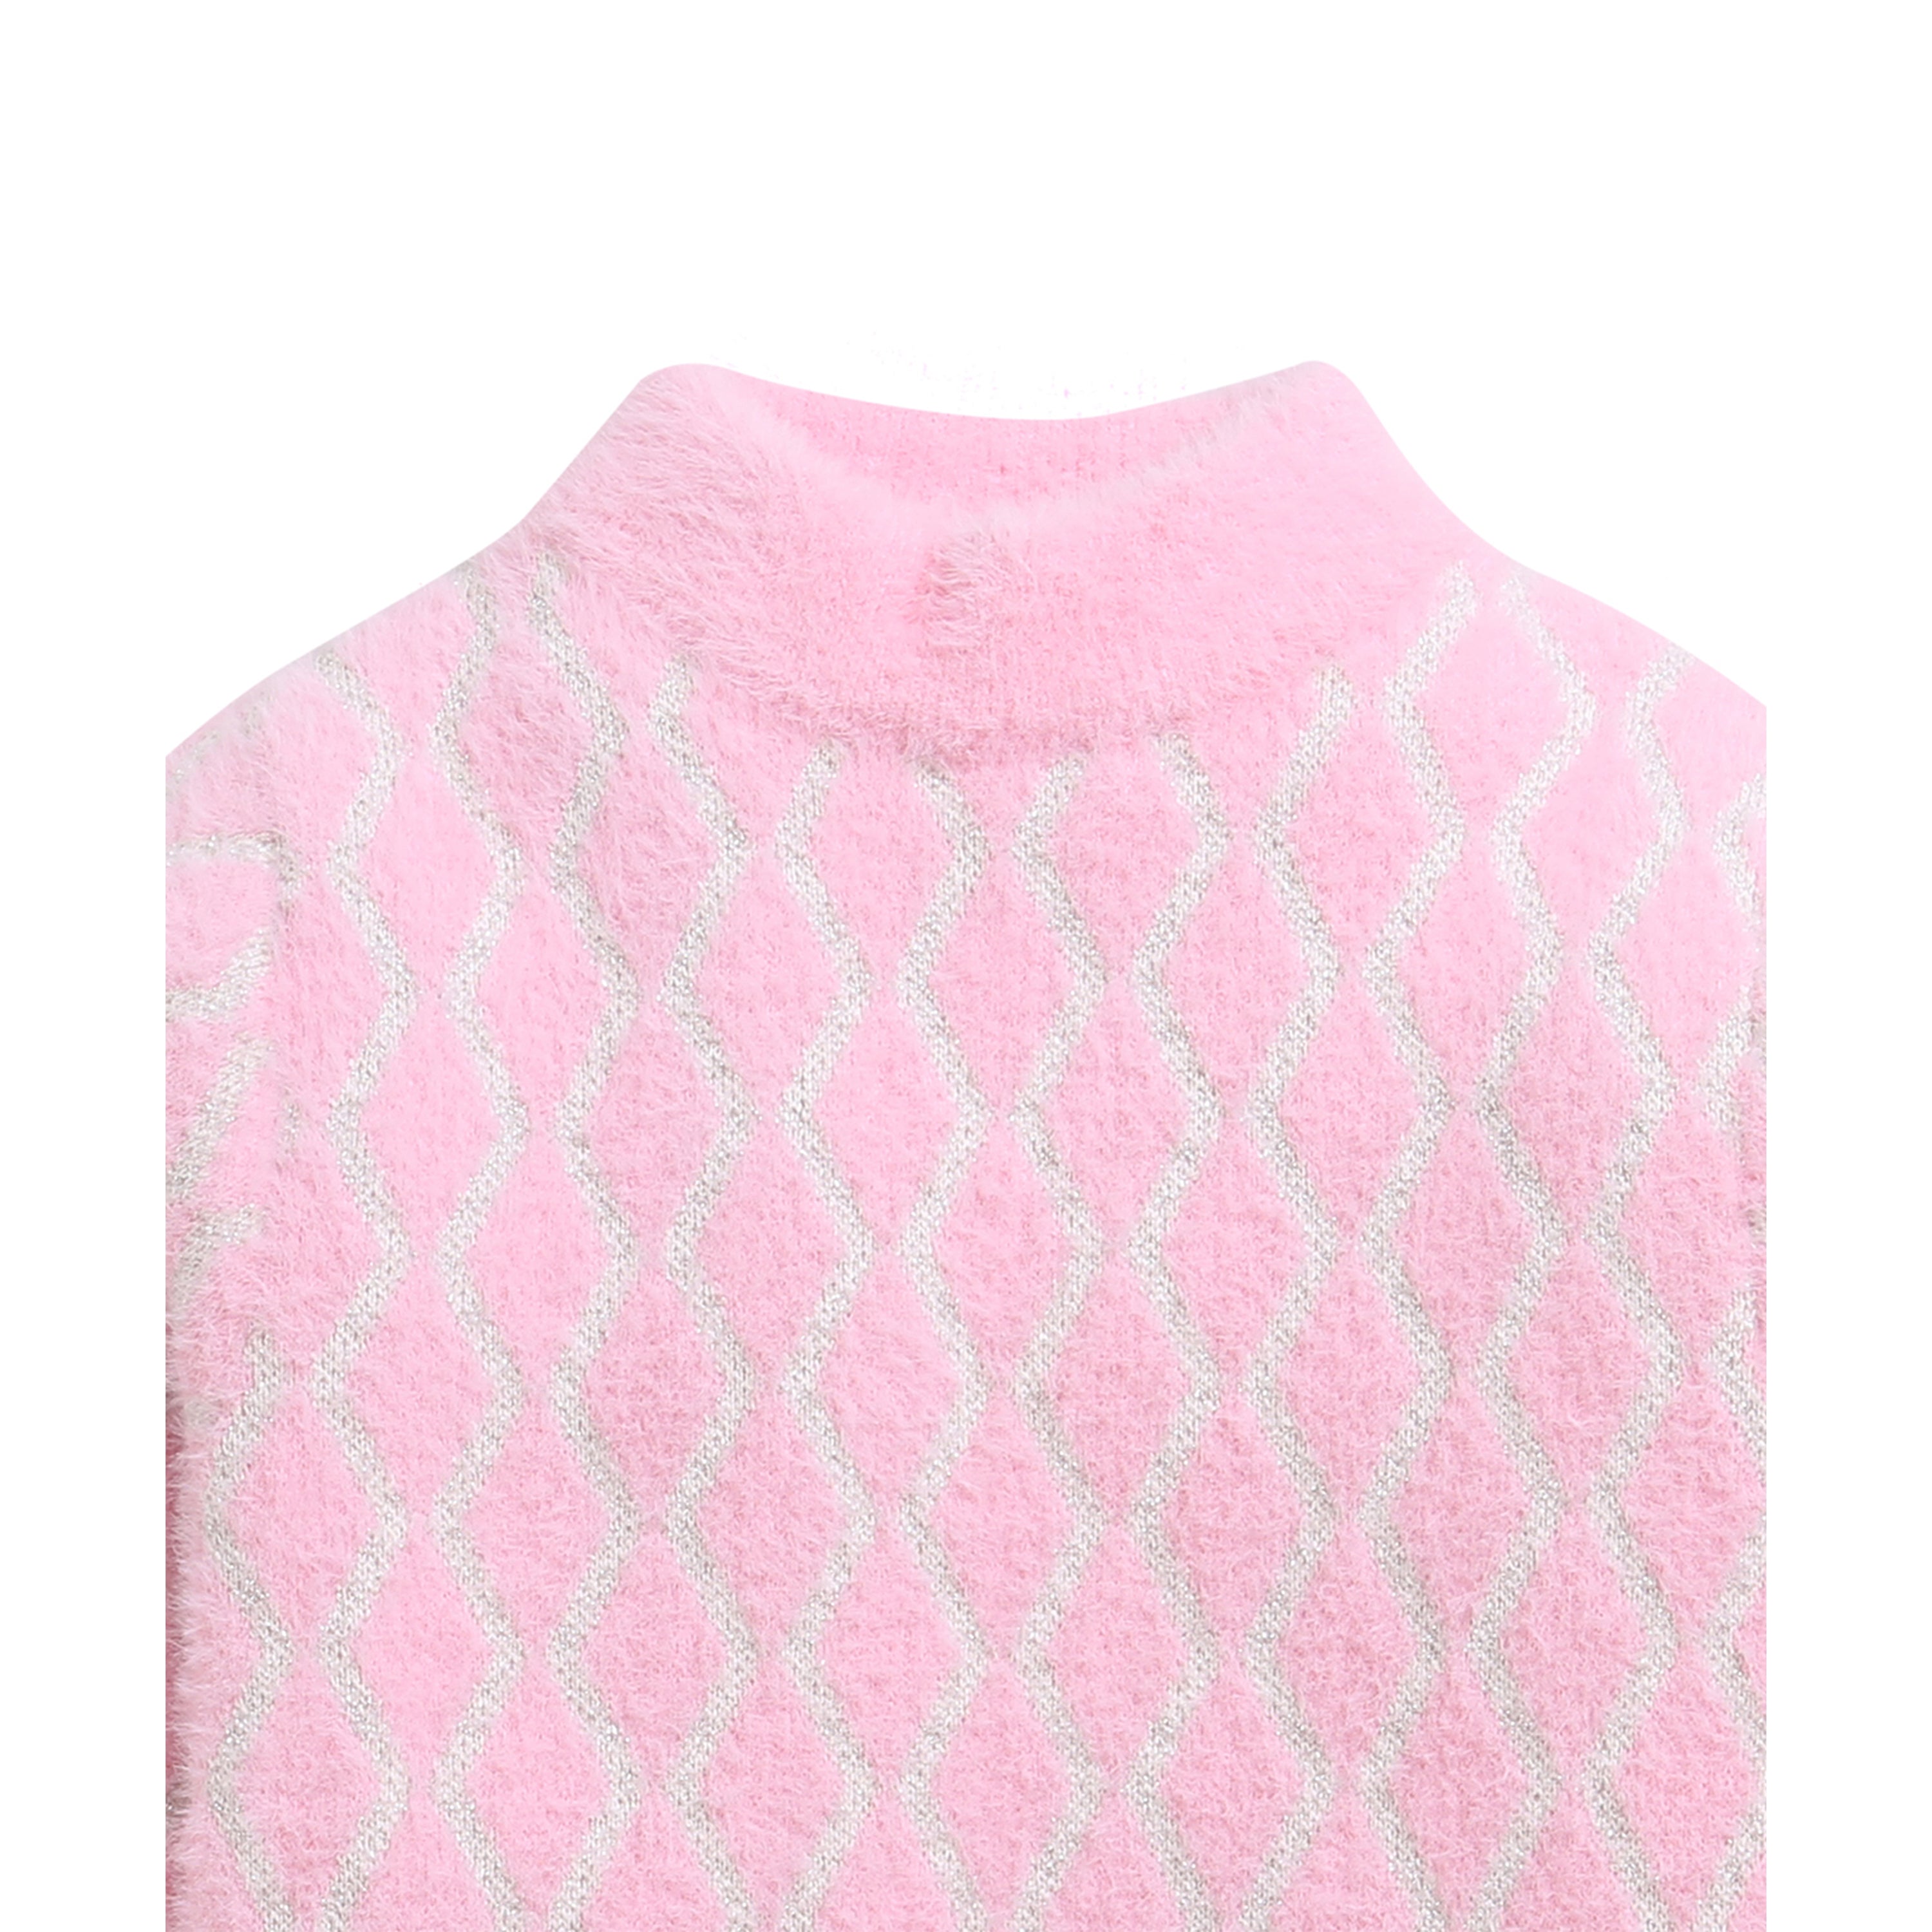 Zigzag Pink Warm Sweater